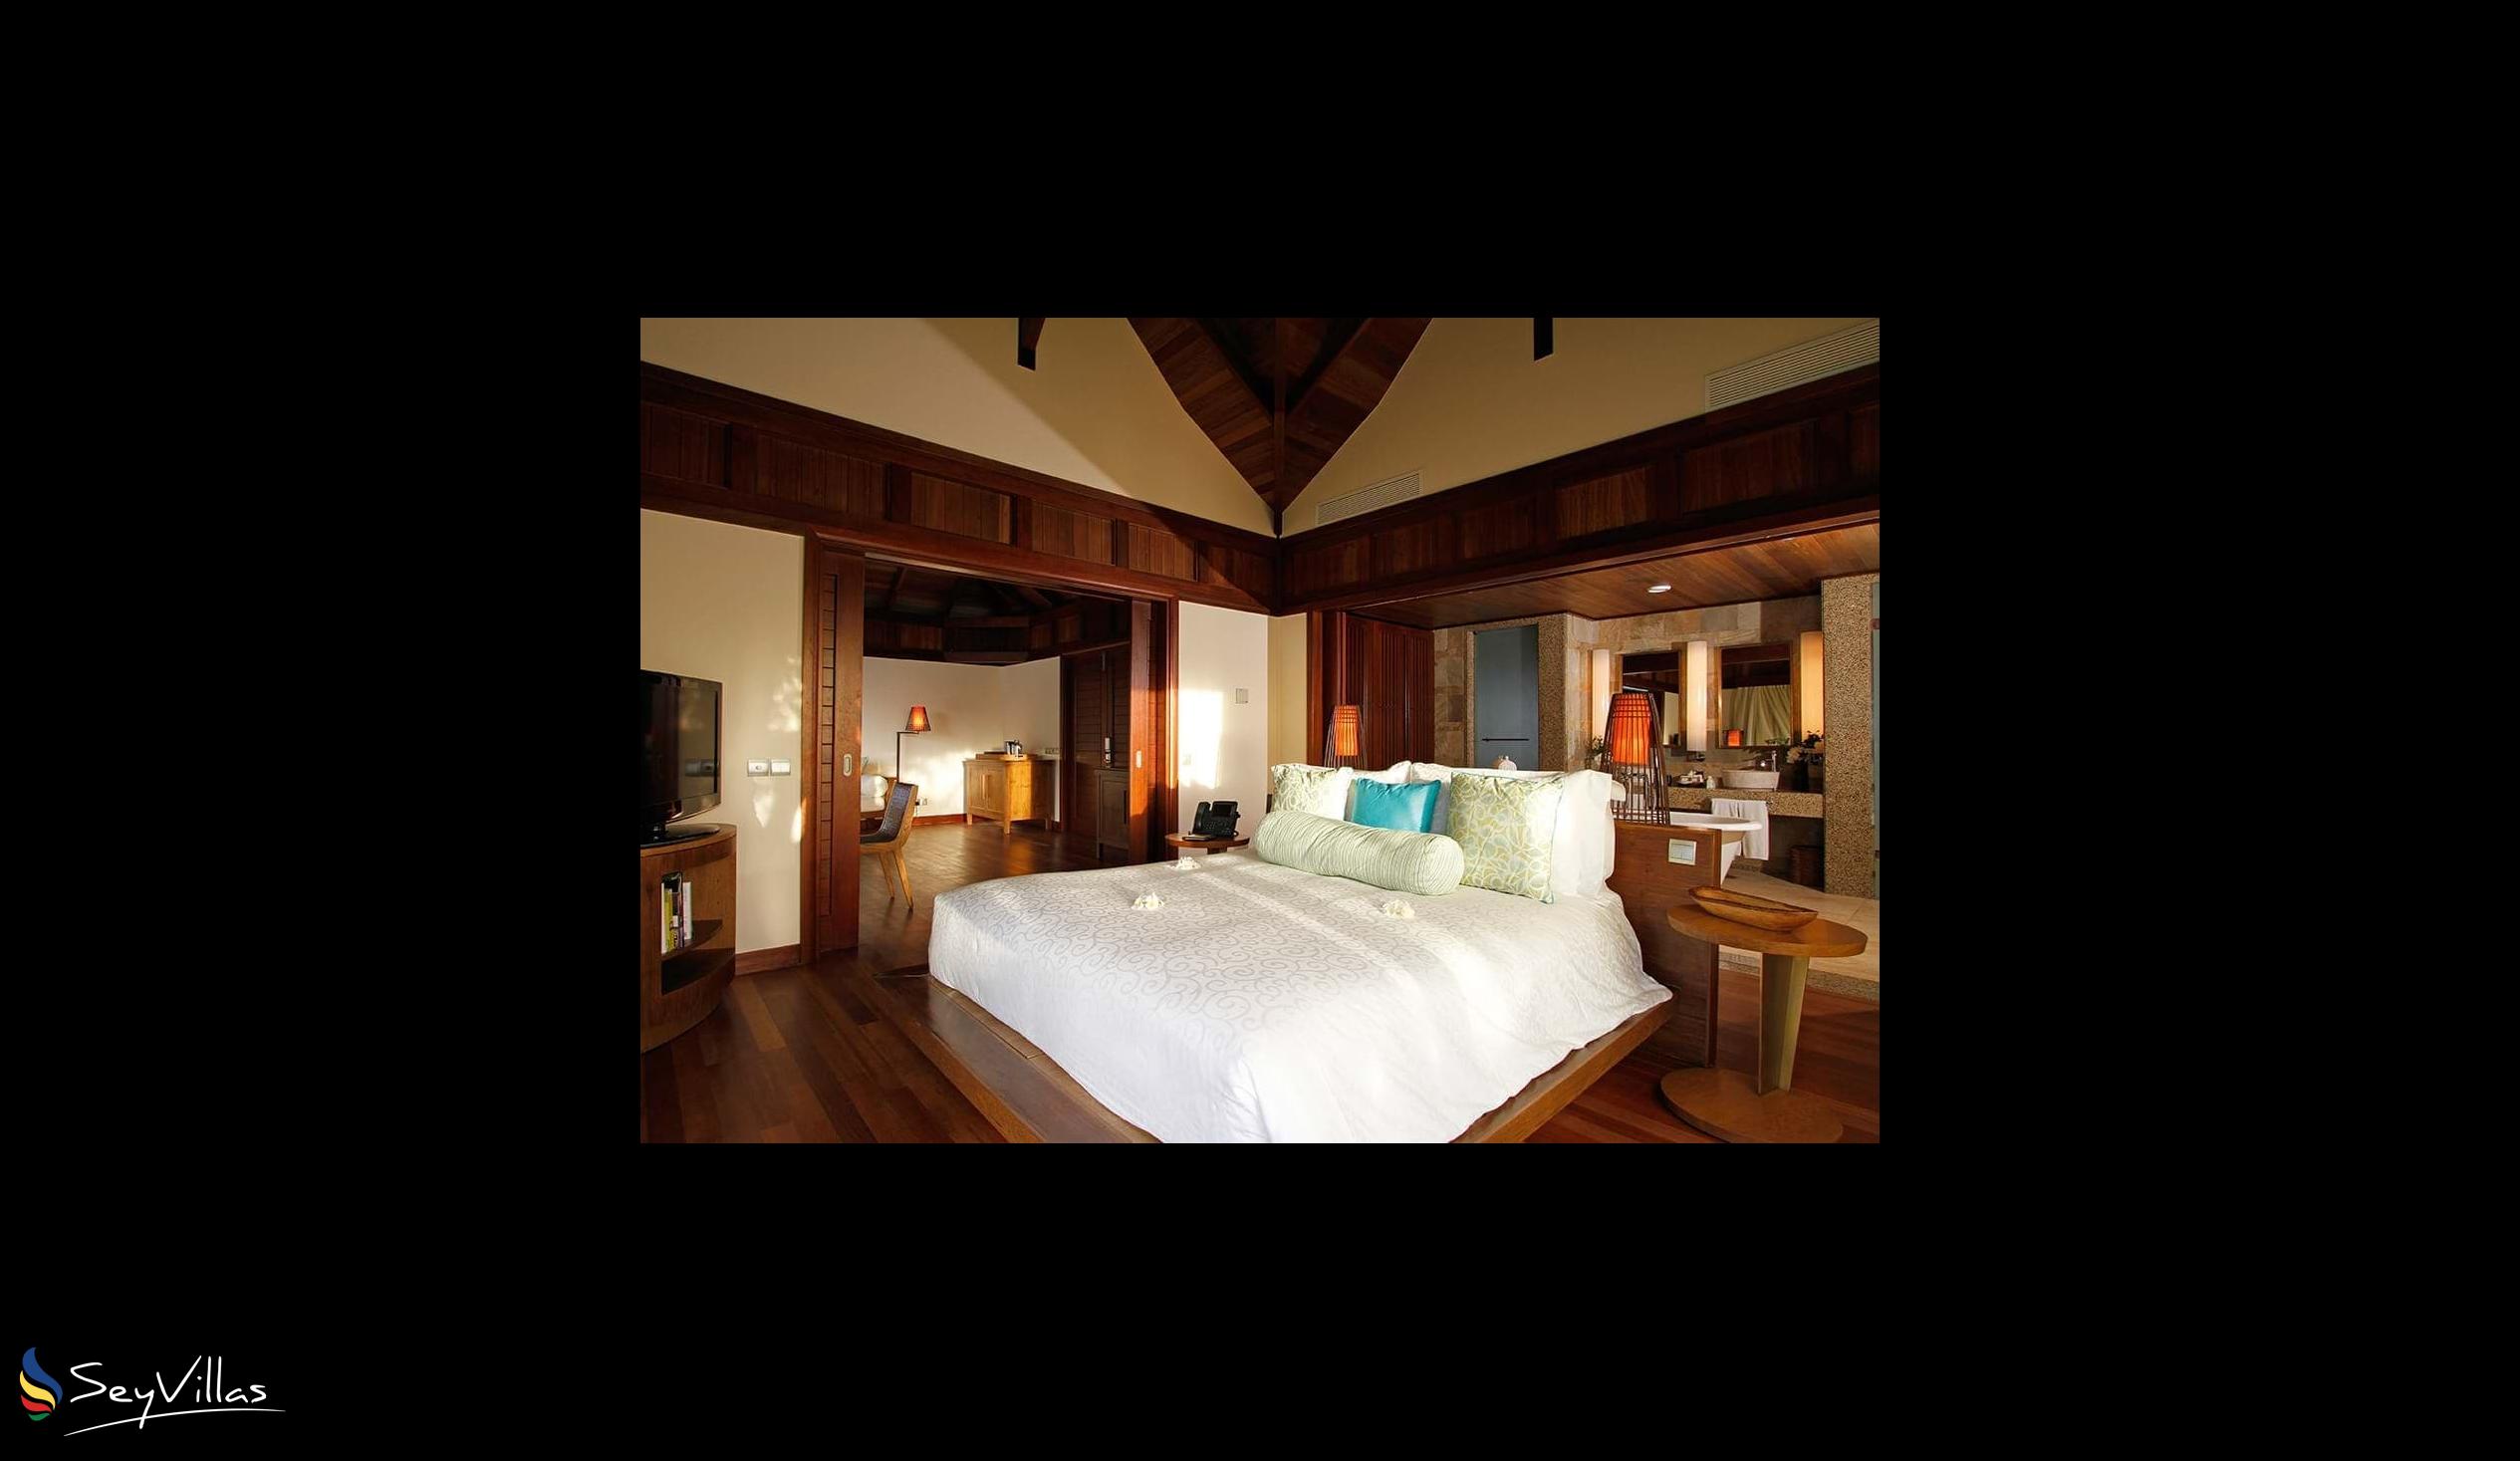 Photo 48: Constance Ephelia Seychelles - 2-Bedroom Hillside Villa - Mahé (Seychelles)